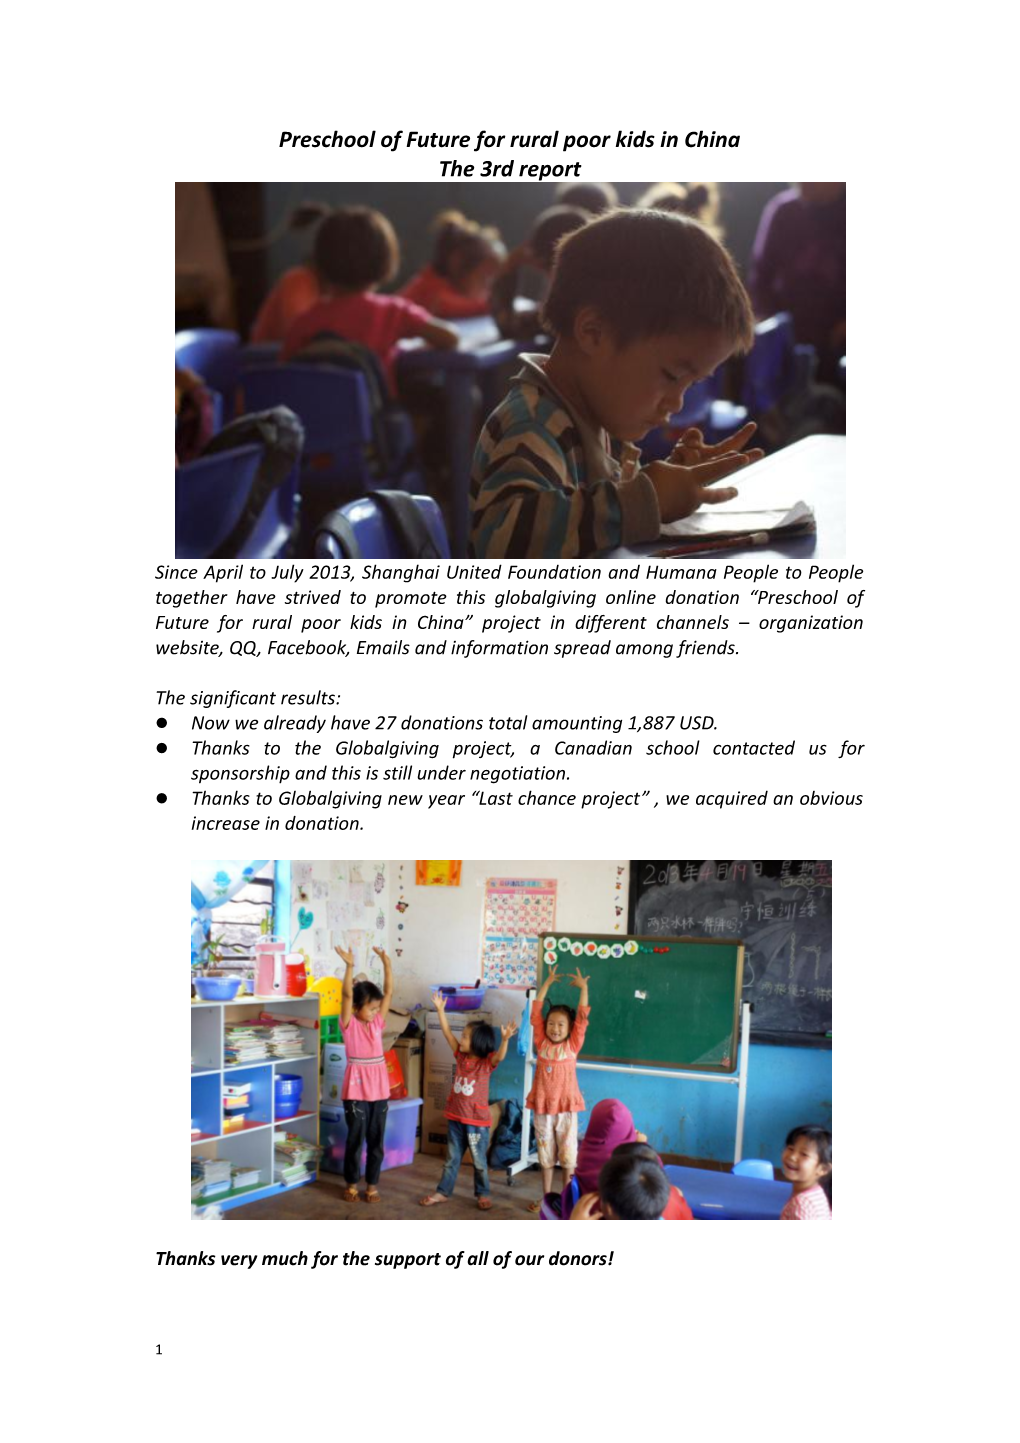 Preschool of Future for Rural Poor Kids in China